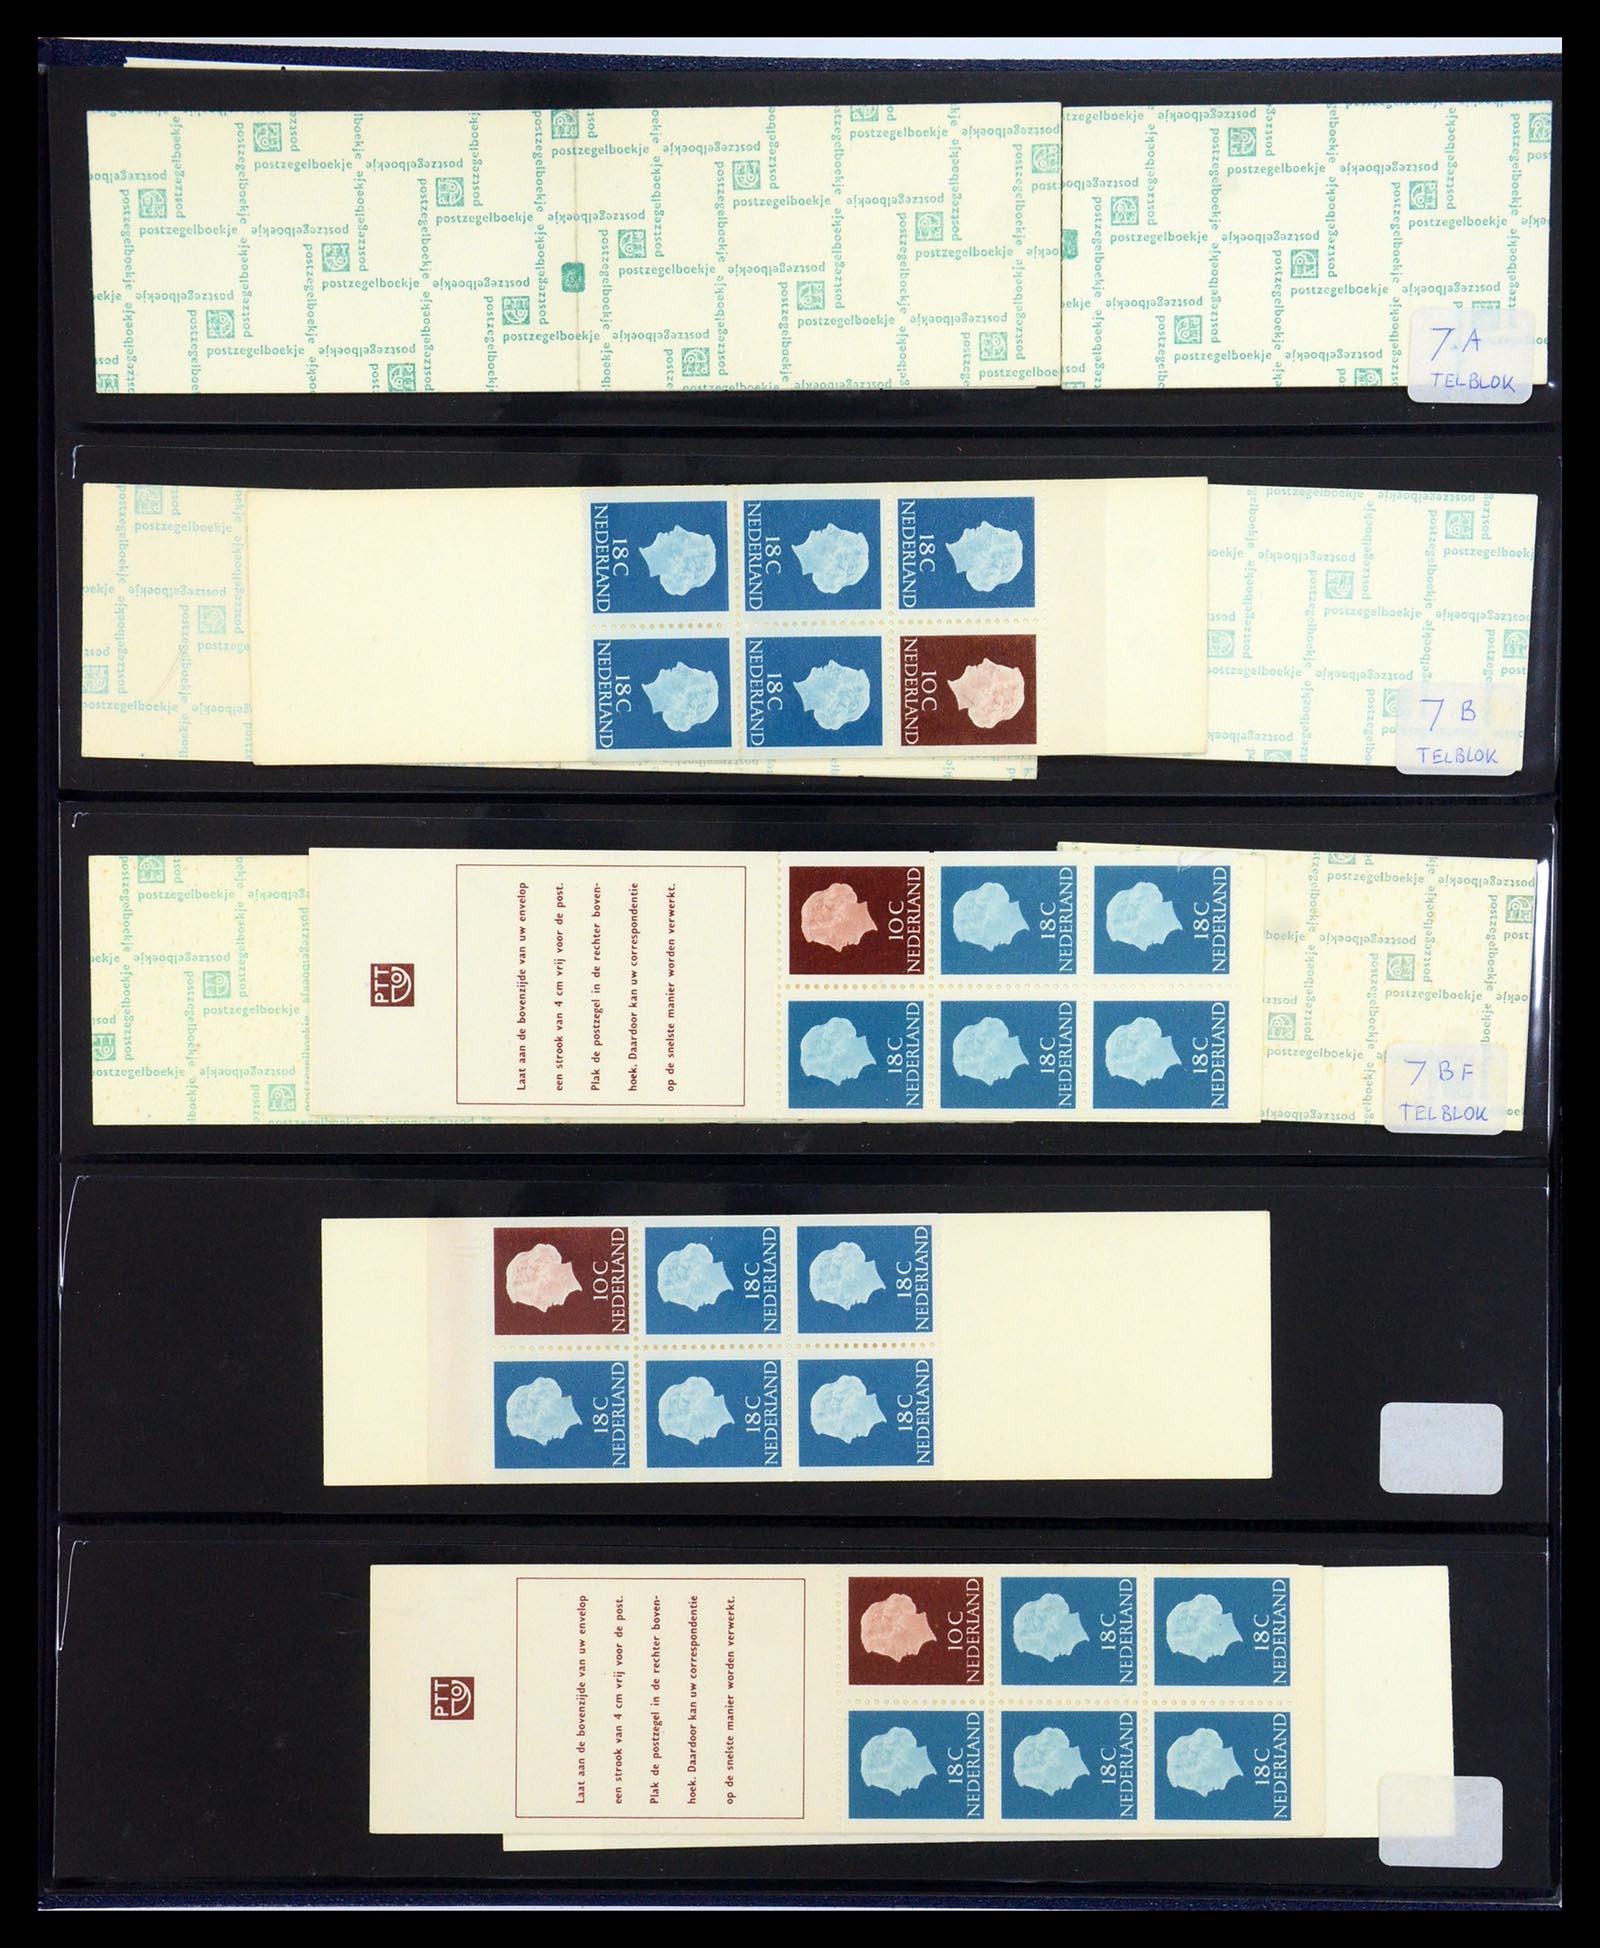 35821 019 - Stamp Collection 35821 Netherlands stamp booklets 1964-1983.